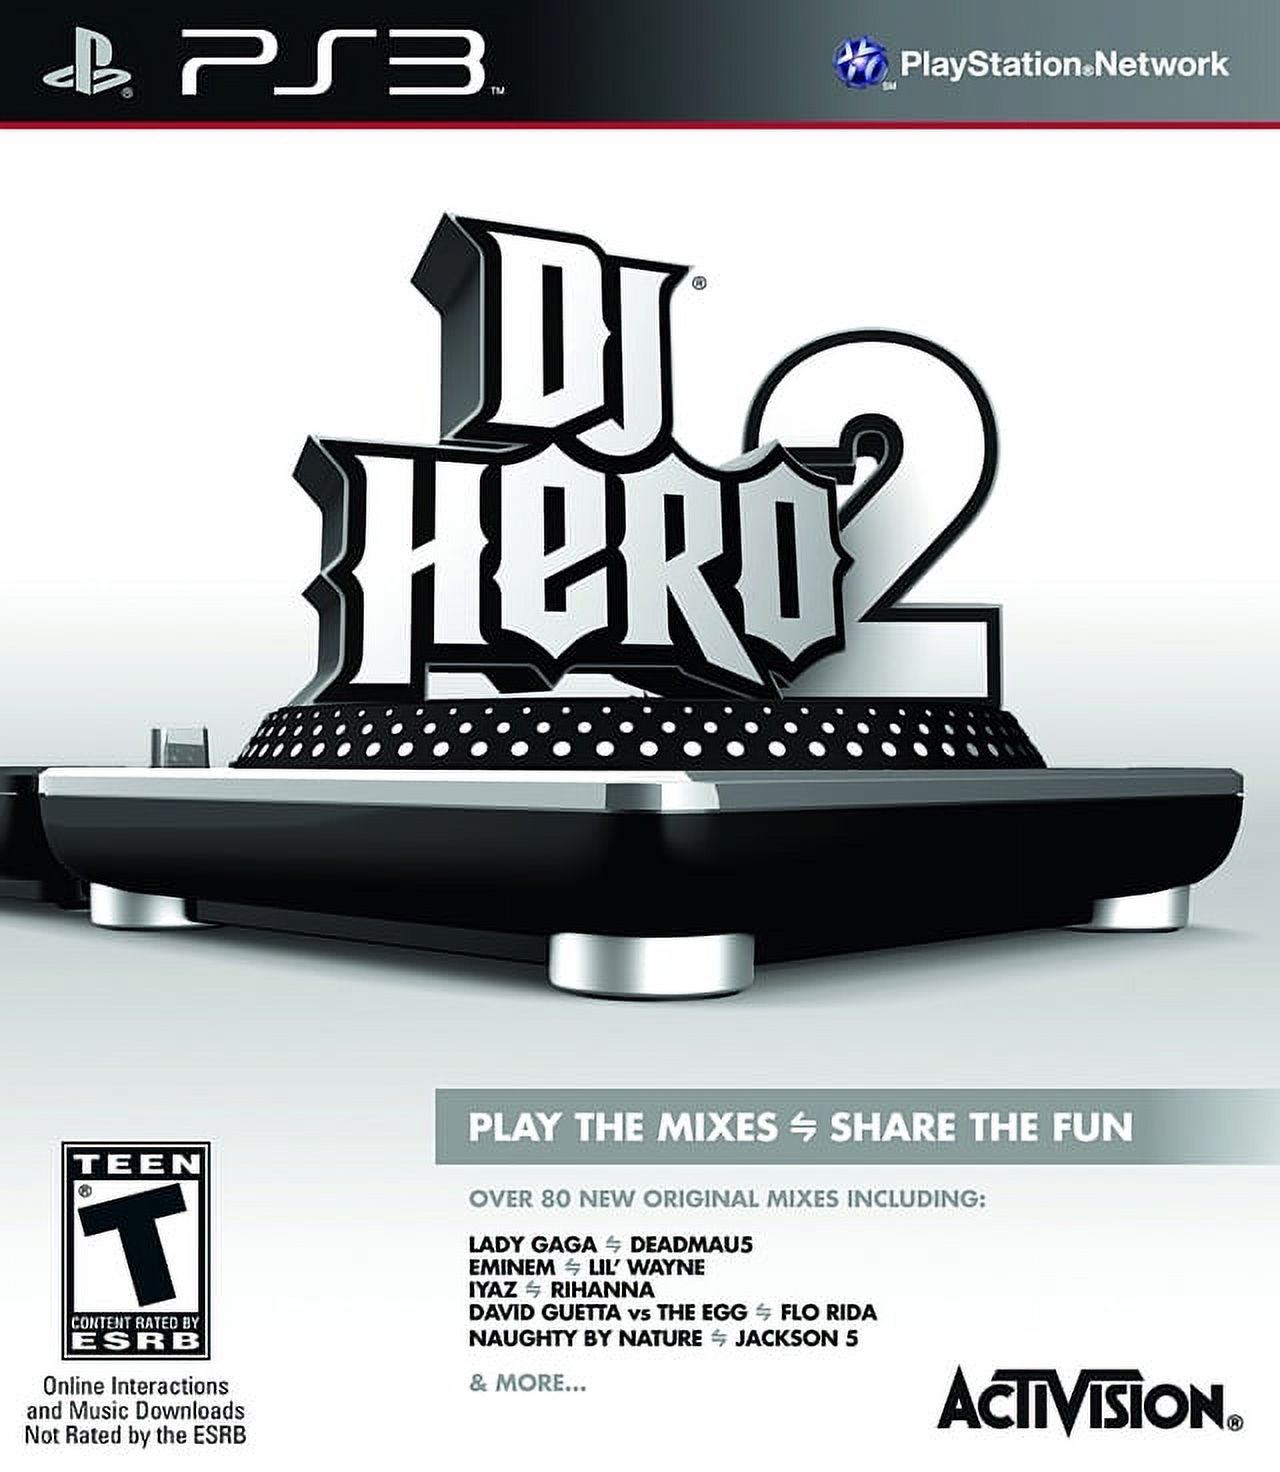 DJ Hero 2 (sw), Activision Blizzard, PlayStation 3, 047875961647 - image 1 of 5